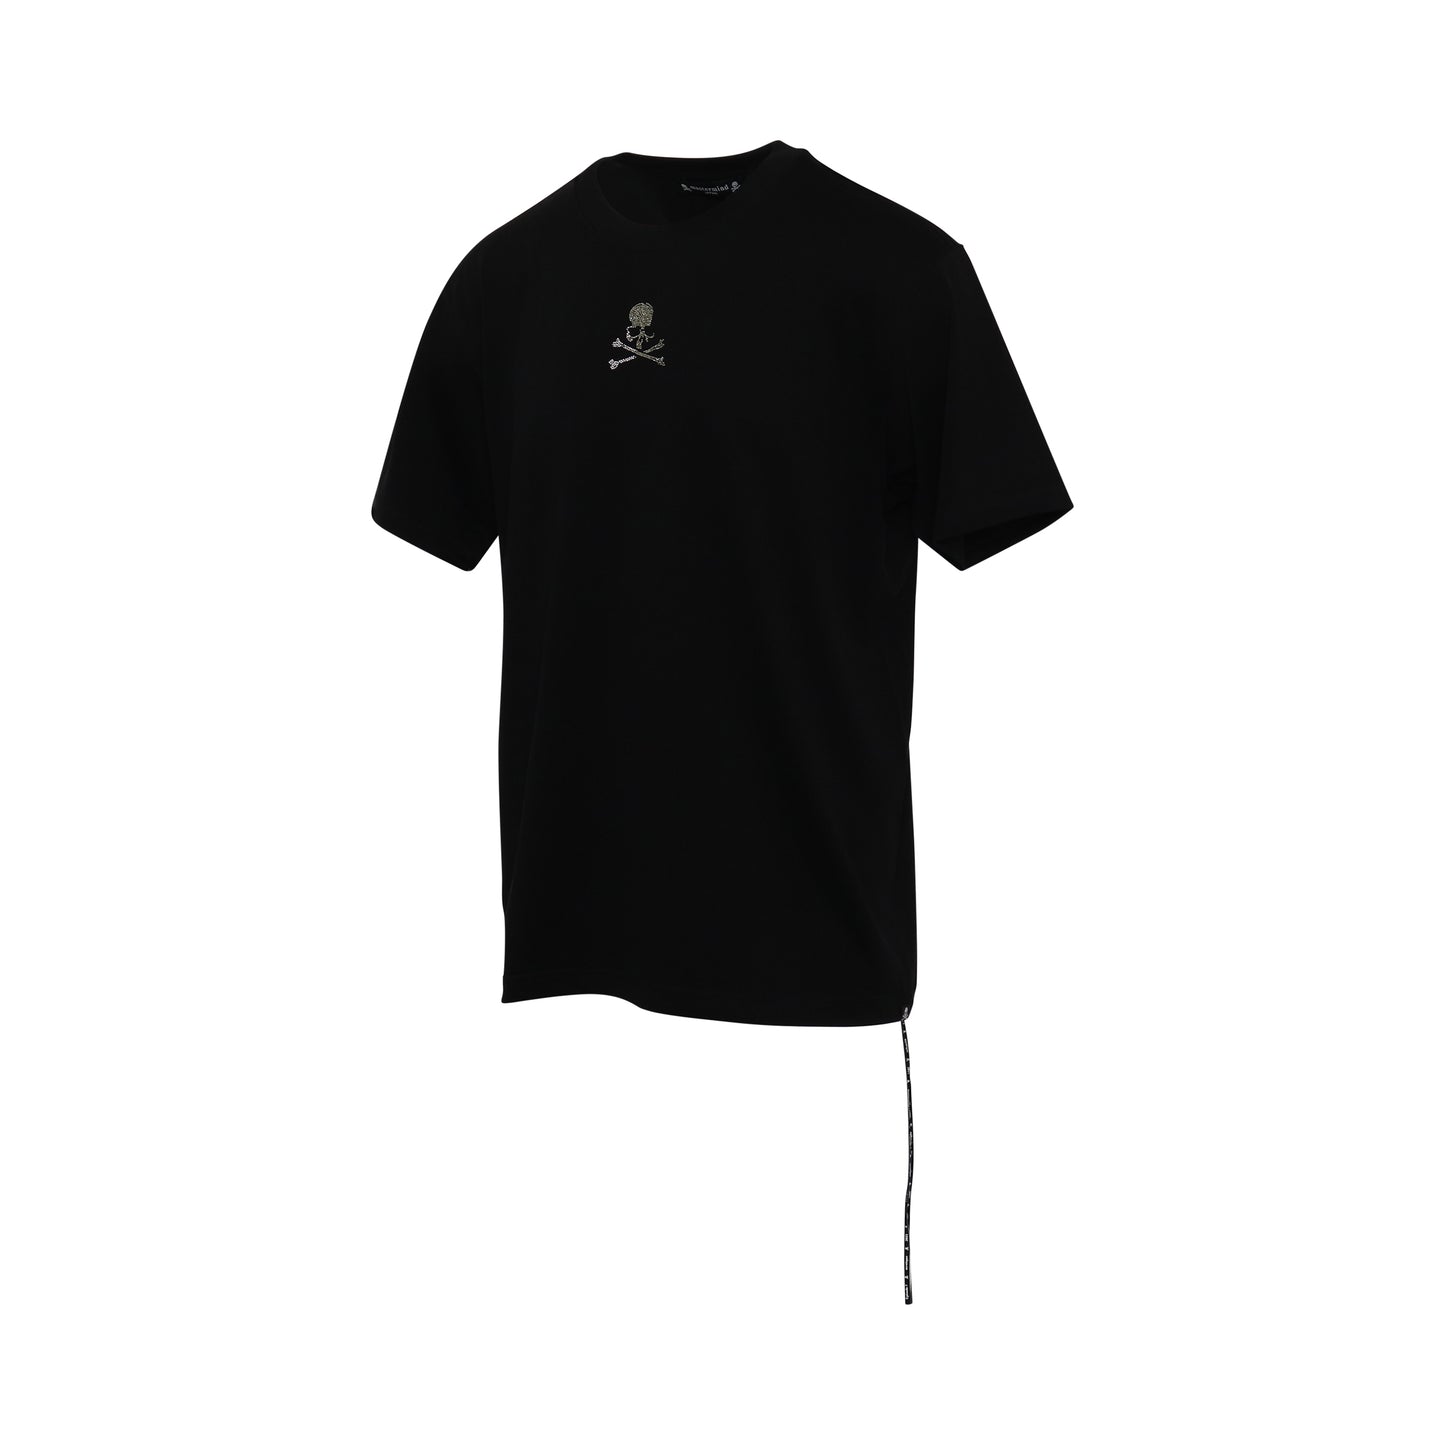 High Swarovski Skull Logo T-Shirt in Black